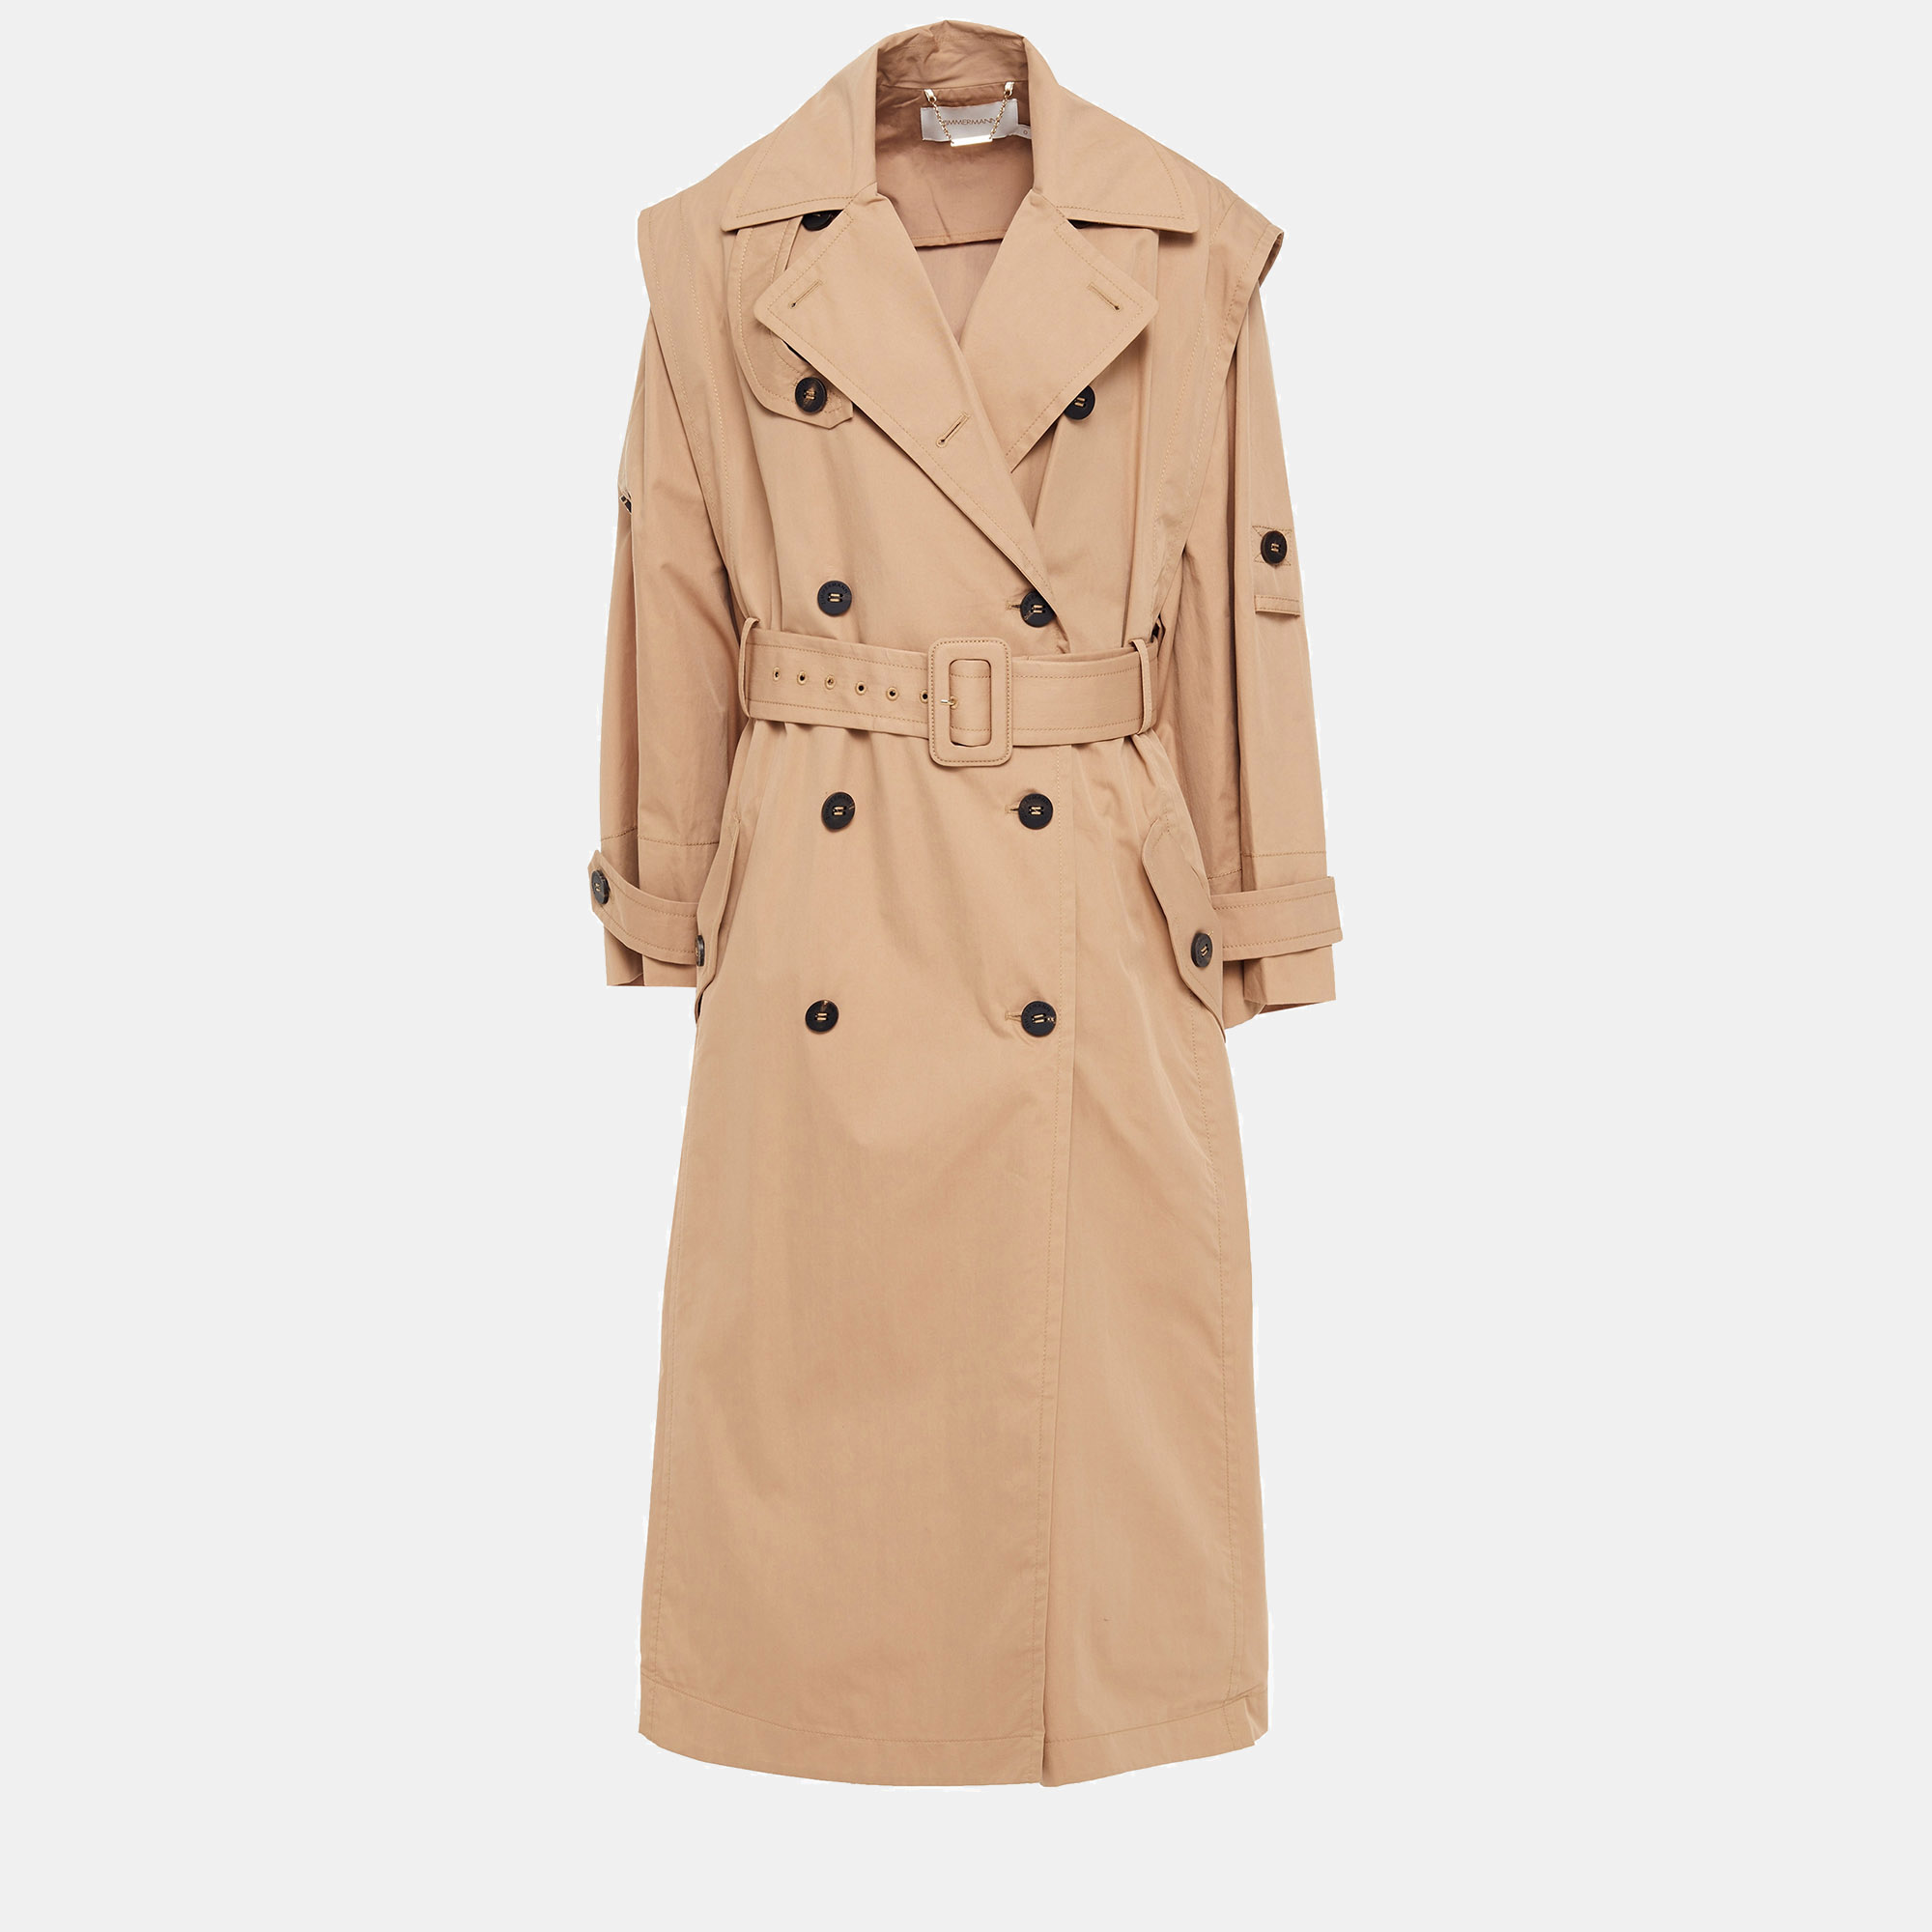 Zimmermann cotton raincoats & trench coat 1